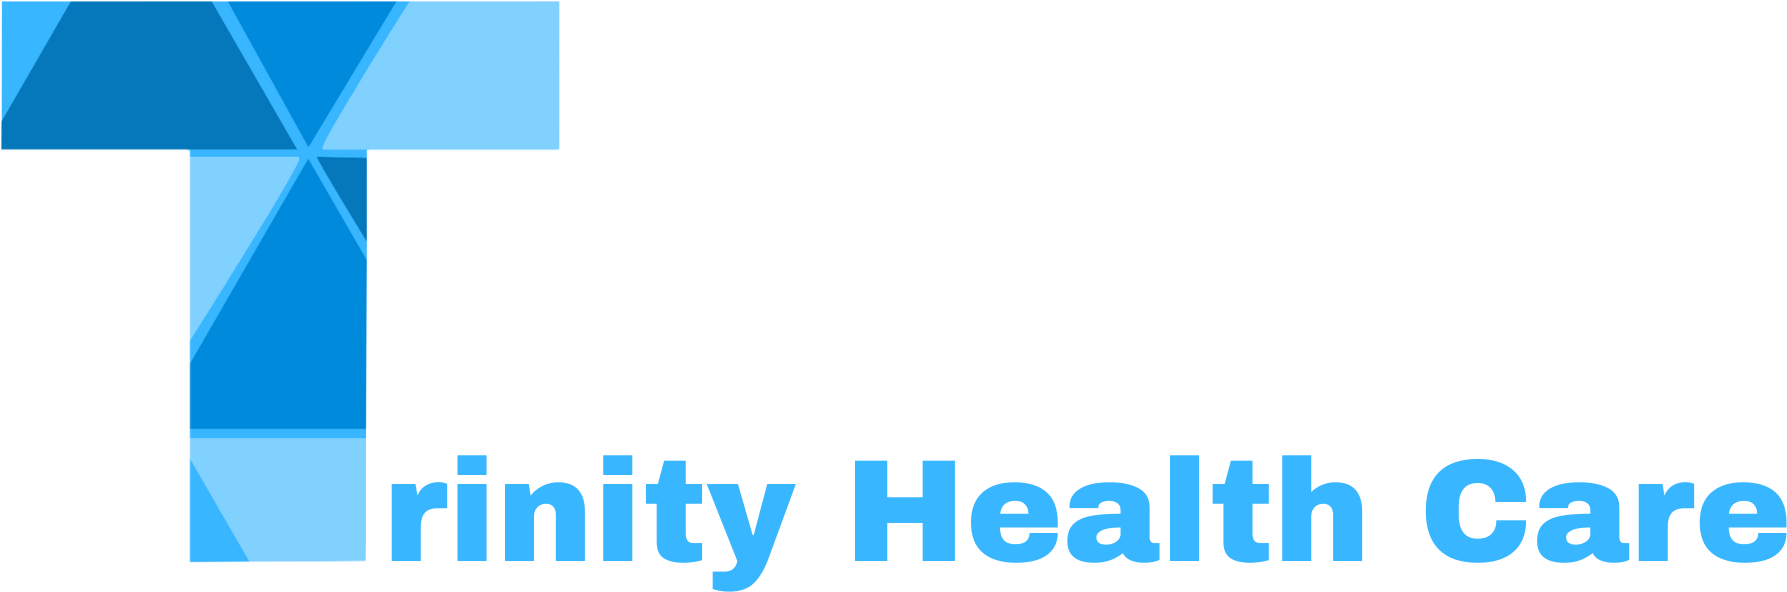 Trinity Health Care